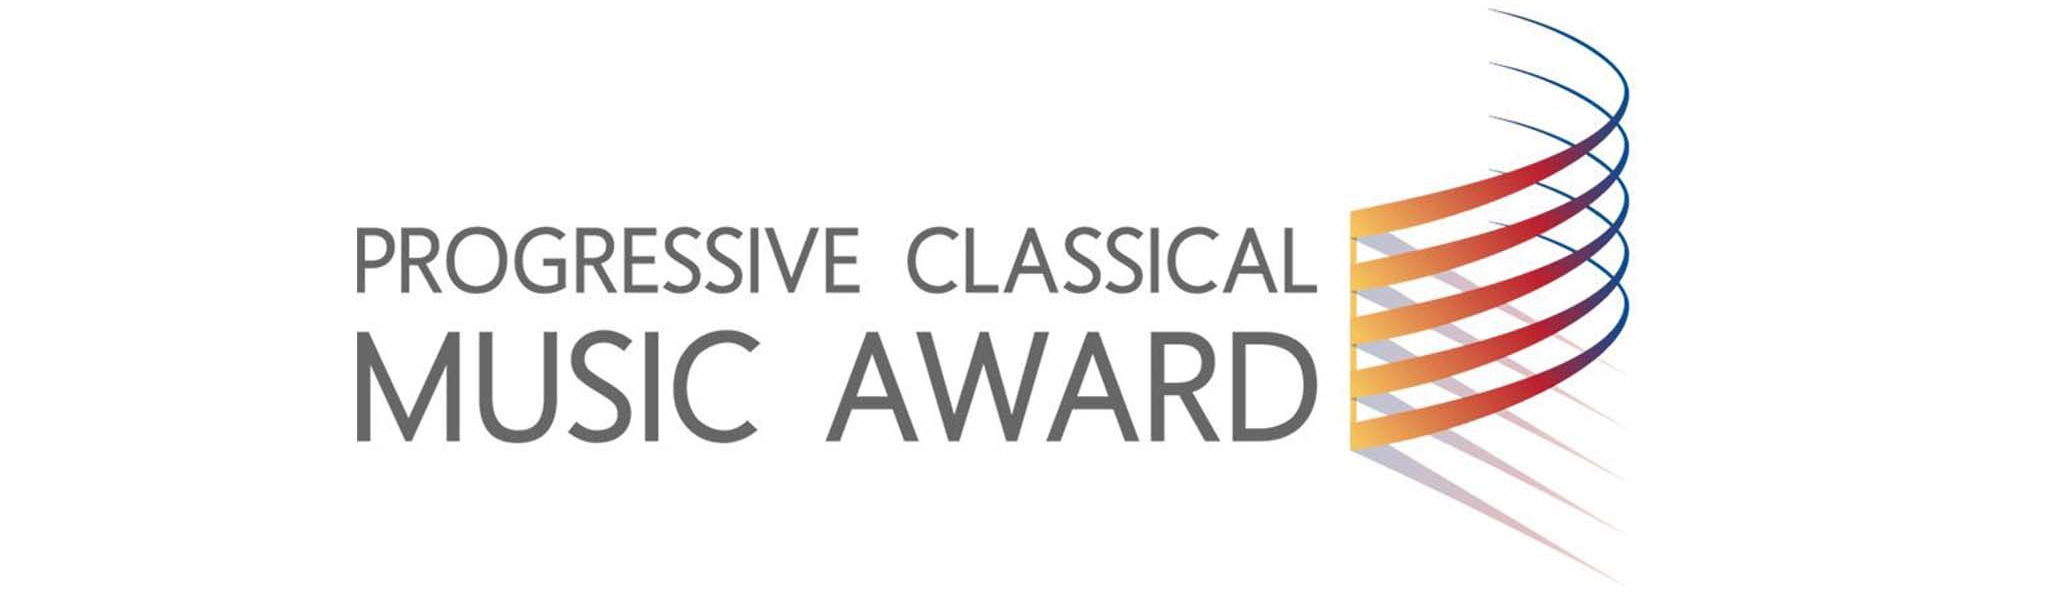 Progressive Classical Music Award 2019